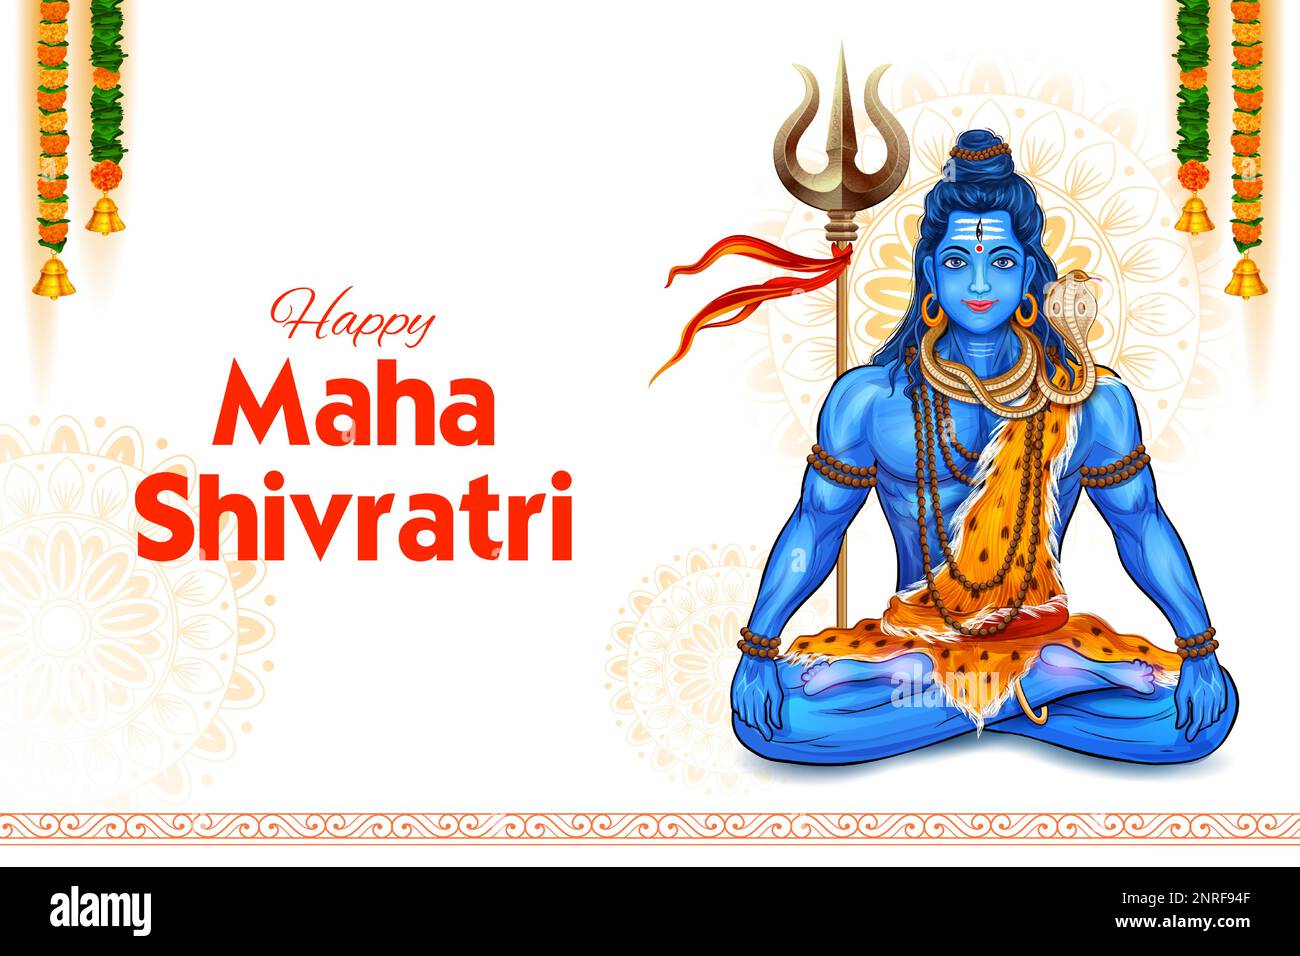 Lord Shiva Linga, indischer Gott der Hindu, zum Maha Shivratri Festival in Indien Stock Vektor